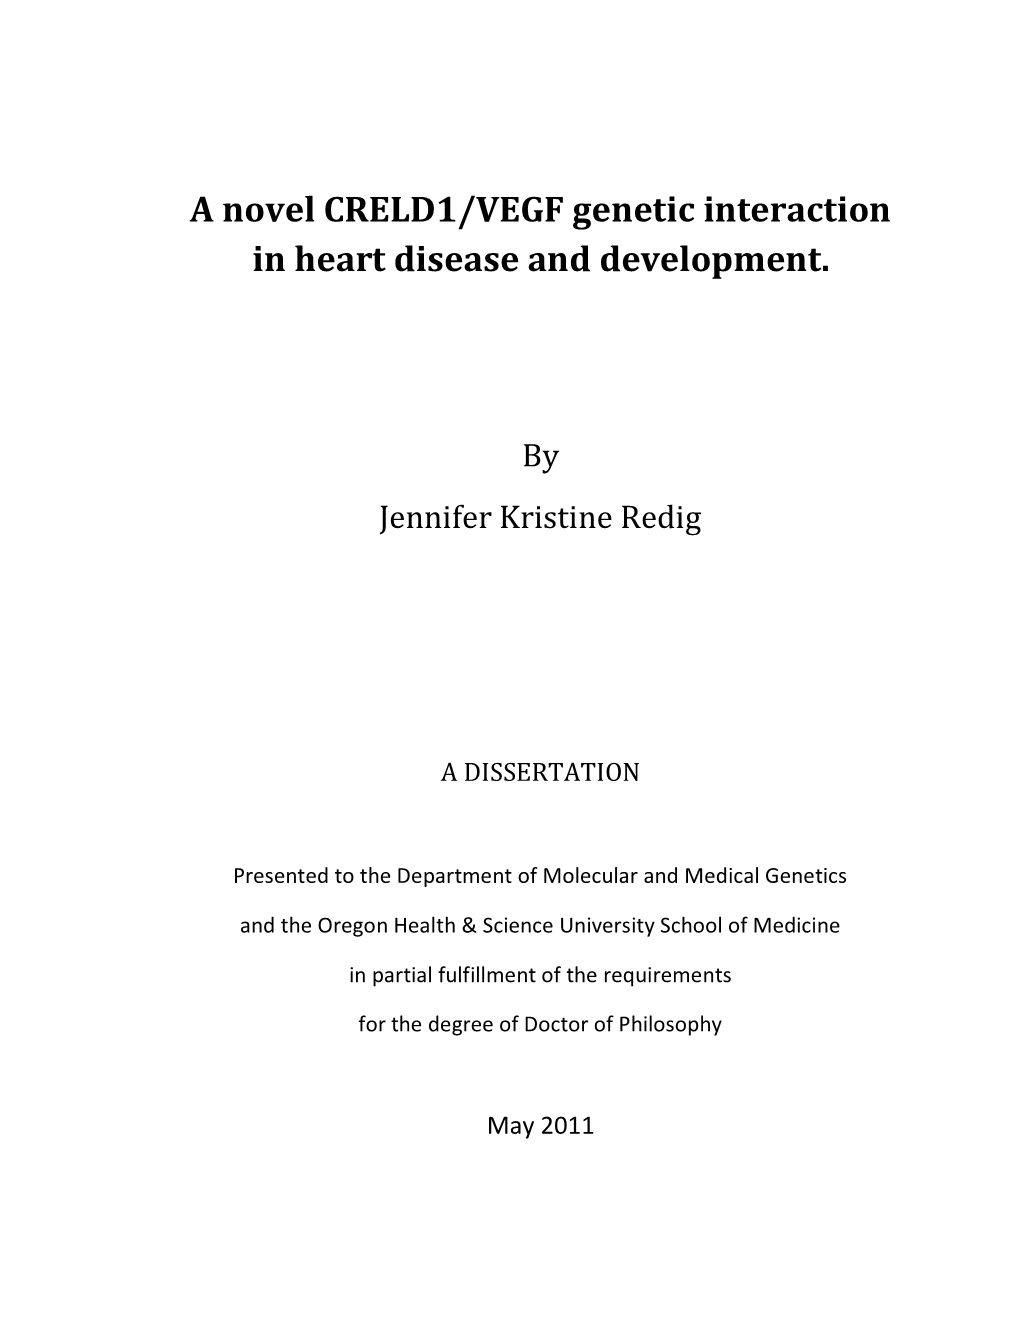 A Novel CRELD1/VEGF Genetic Interaction in Heart Disease and Development